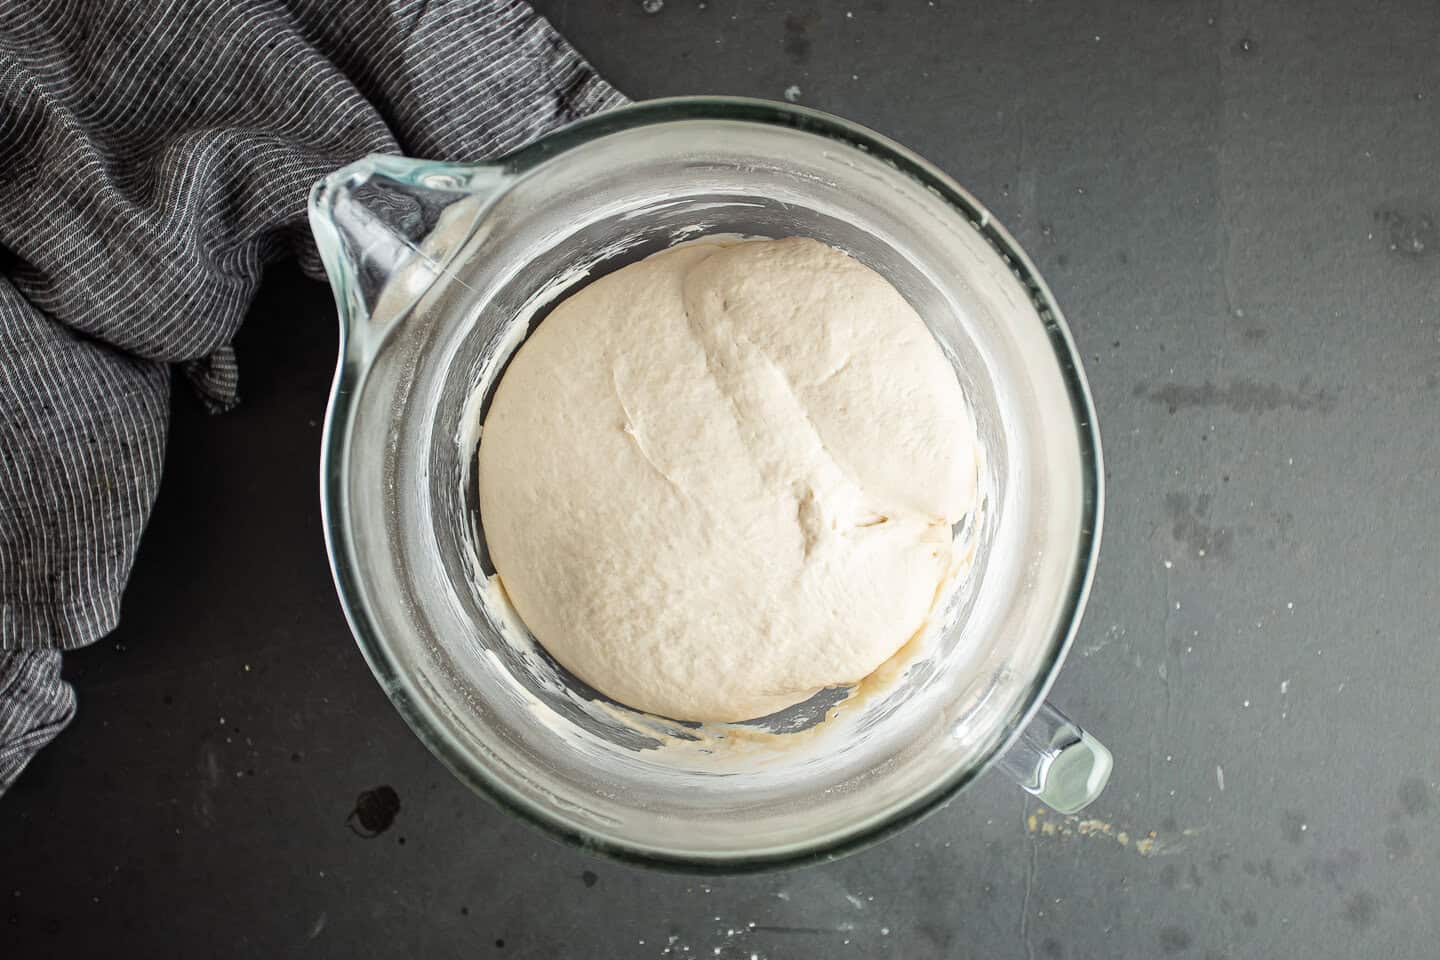 Pita bread dough risen to twice its original volume.